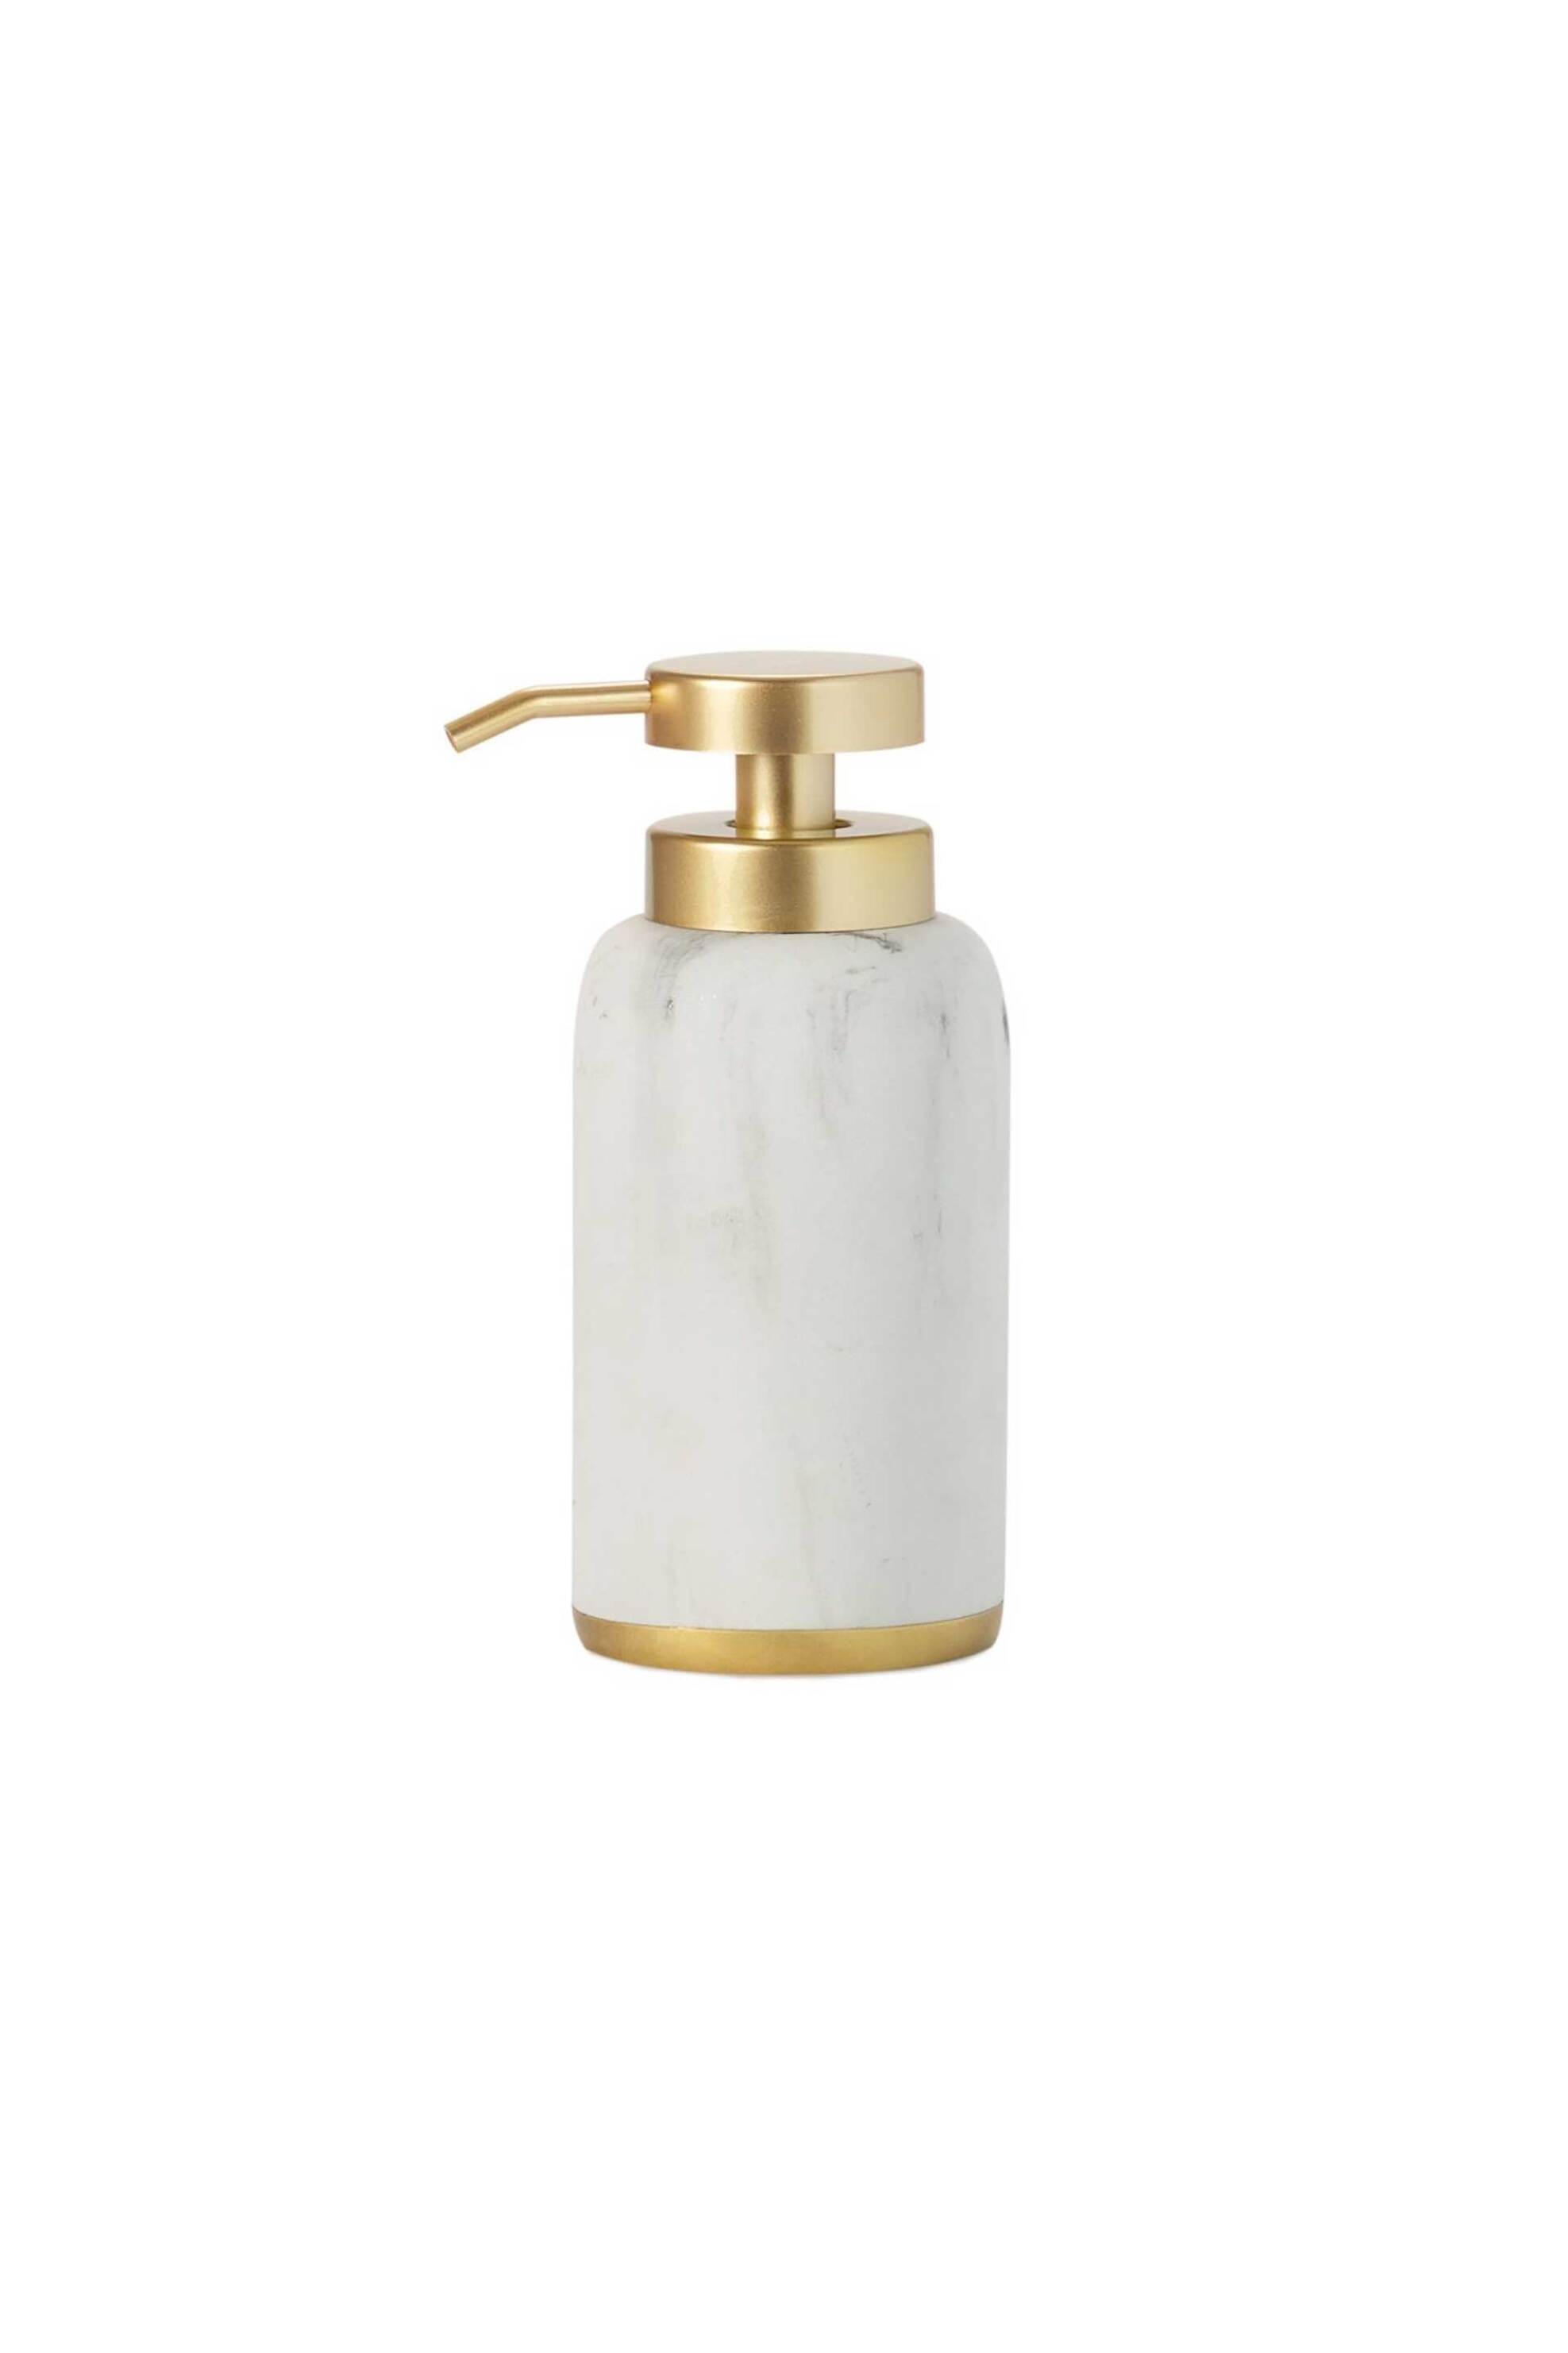 Andrea House αντλία για υγρό σαπούνι με μαρμάρινο φινίρισμα 400 ml - BA72074 2-8869001162